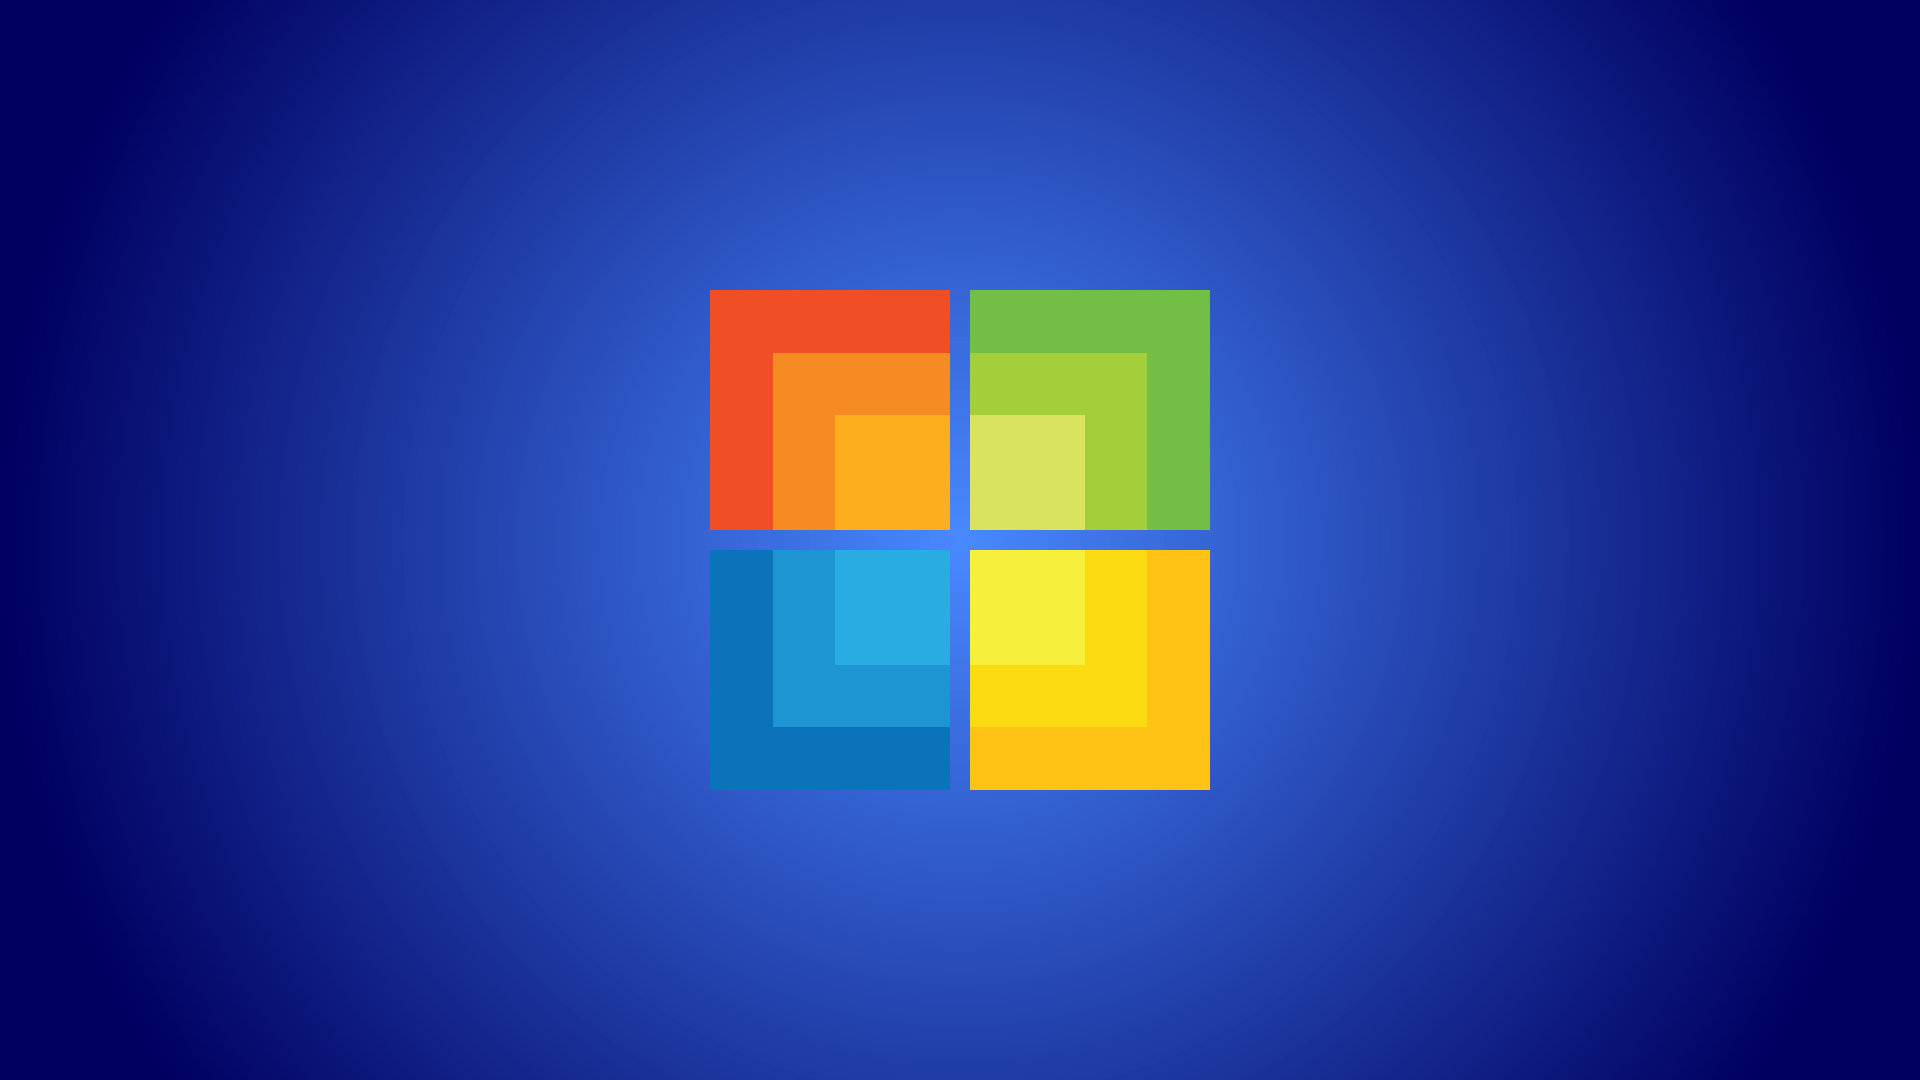  Microsoft Windows 8 Logo Version desktop PC and Mac wallpaper 1920x1080